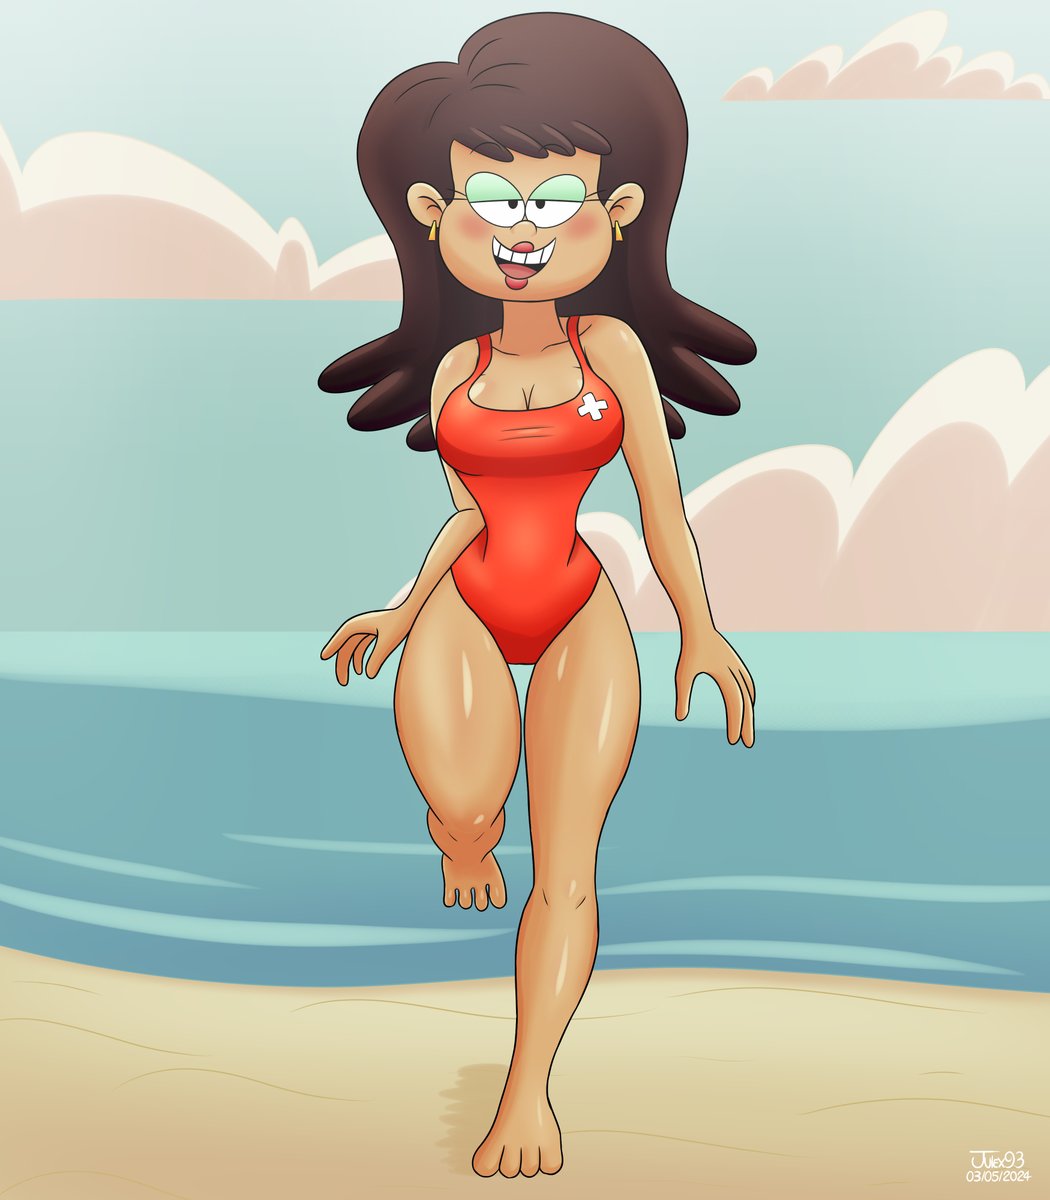 A new commission of TLH bikini girls, now it's Nurse Patti's turn, wearing a lifeguard suit to match. I hope you like it.

#commission #commissionart #TheLoudHouse #loudhouse #nursepatti #beach #myart #myartwork #julex93drawings #julex93